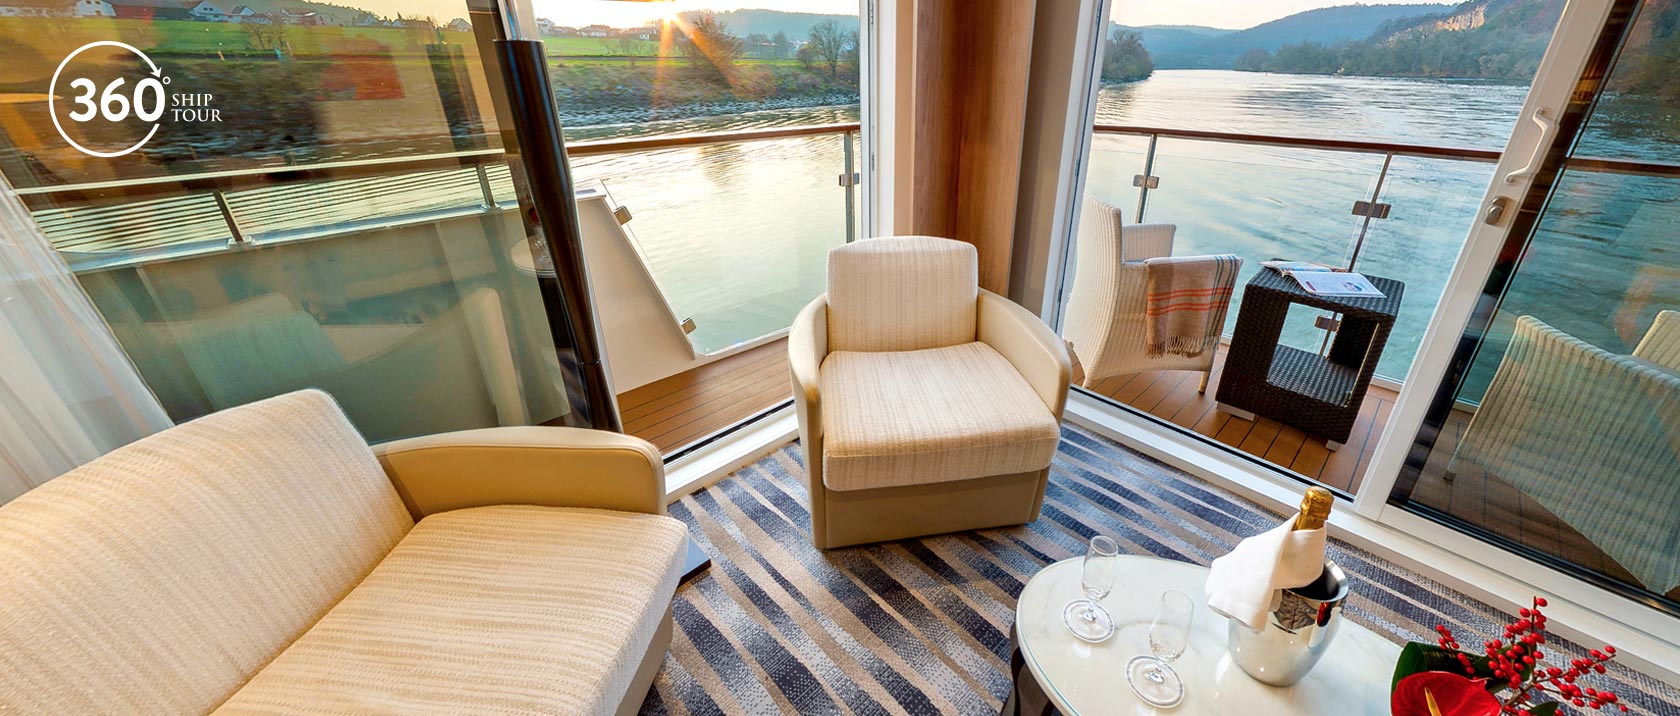 viking river cruise ship interior